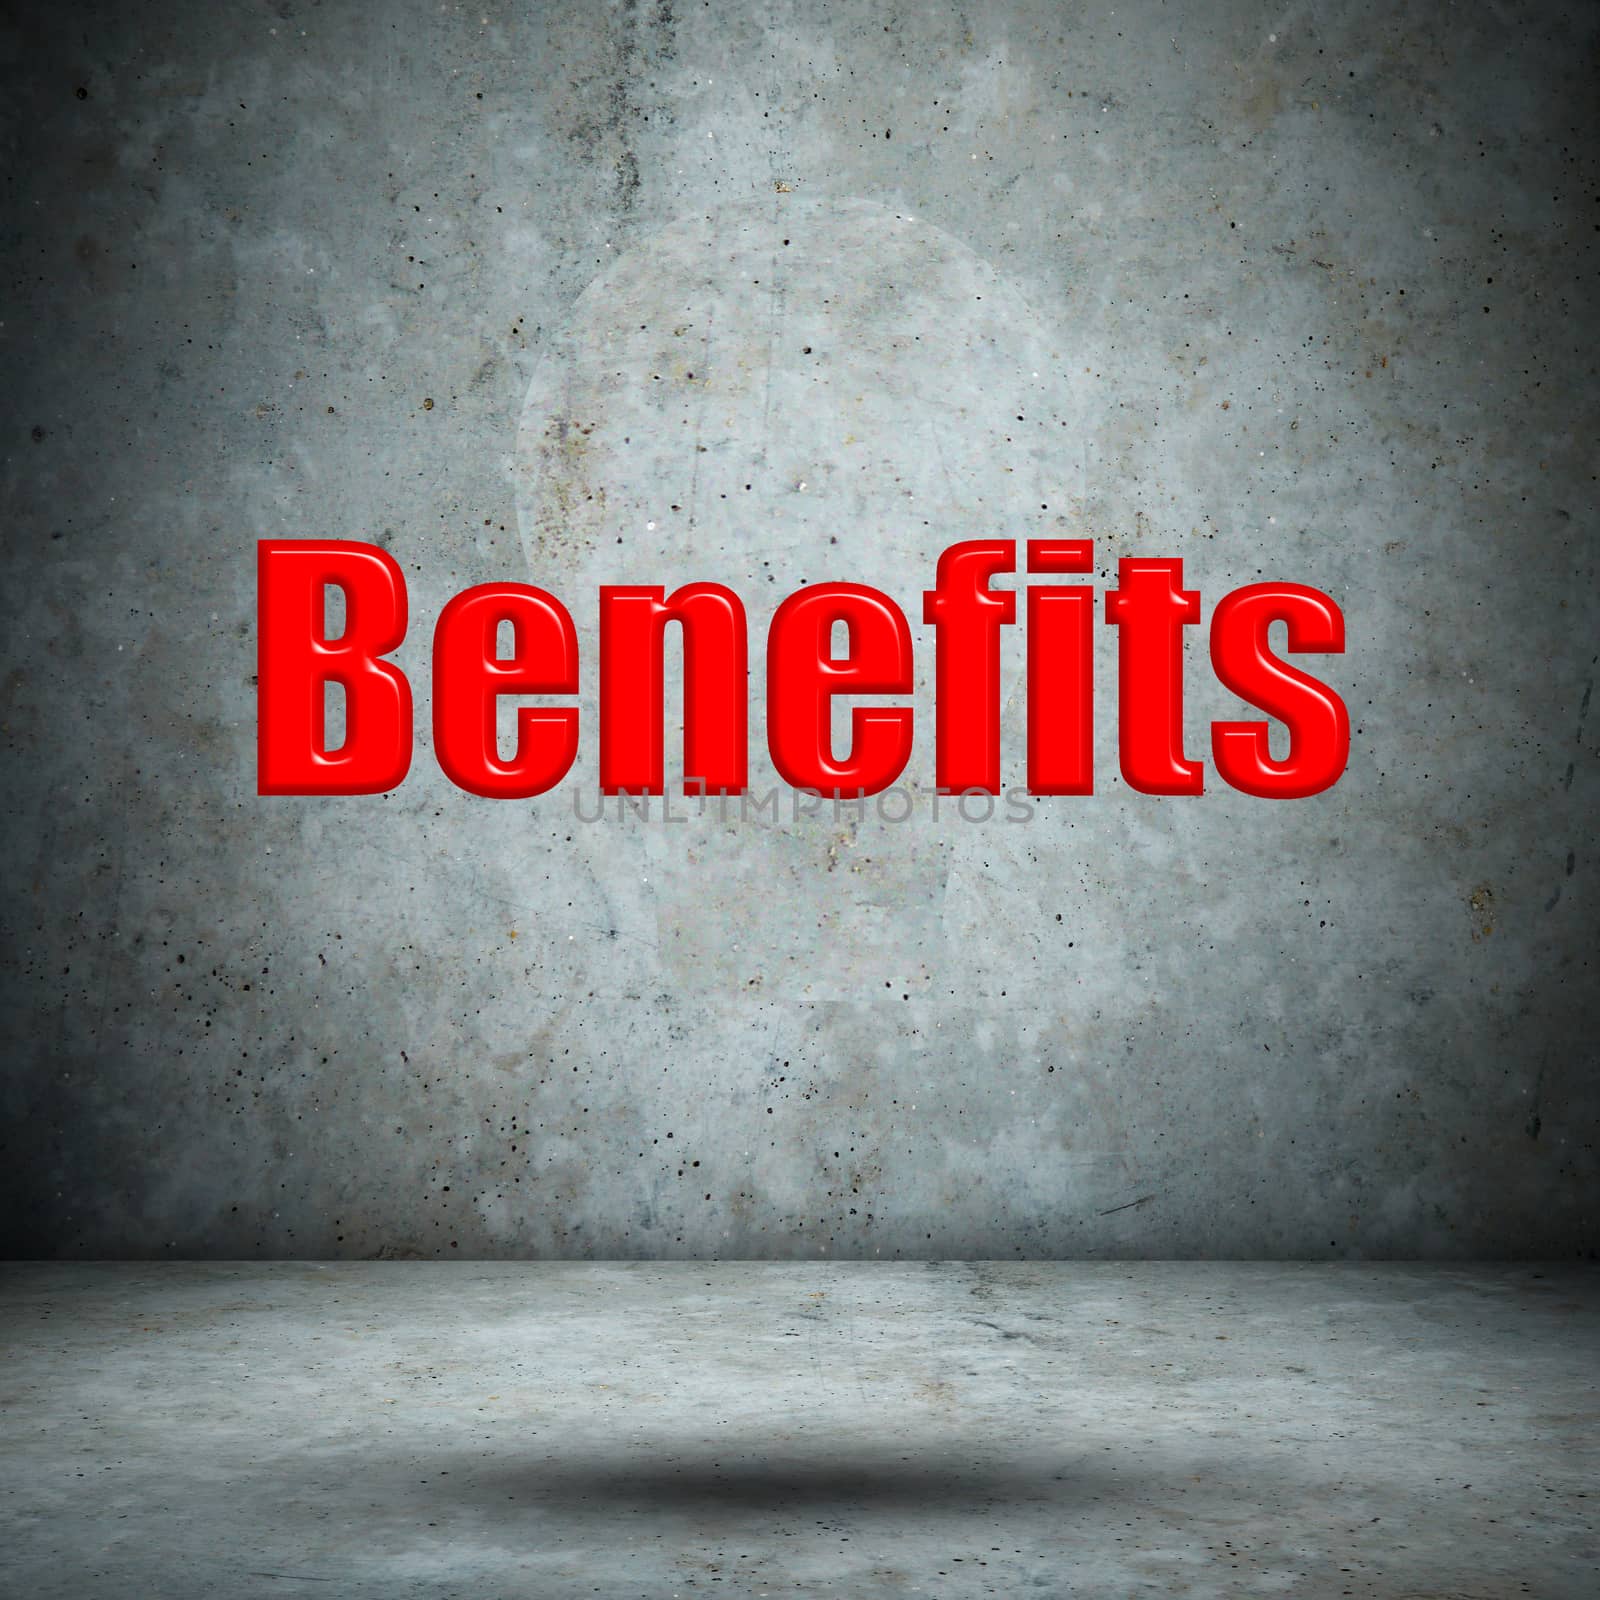 Benefits on concrete wall by tuk69tuk